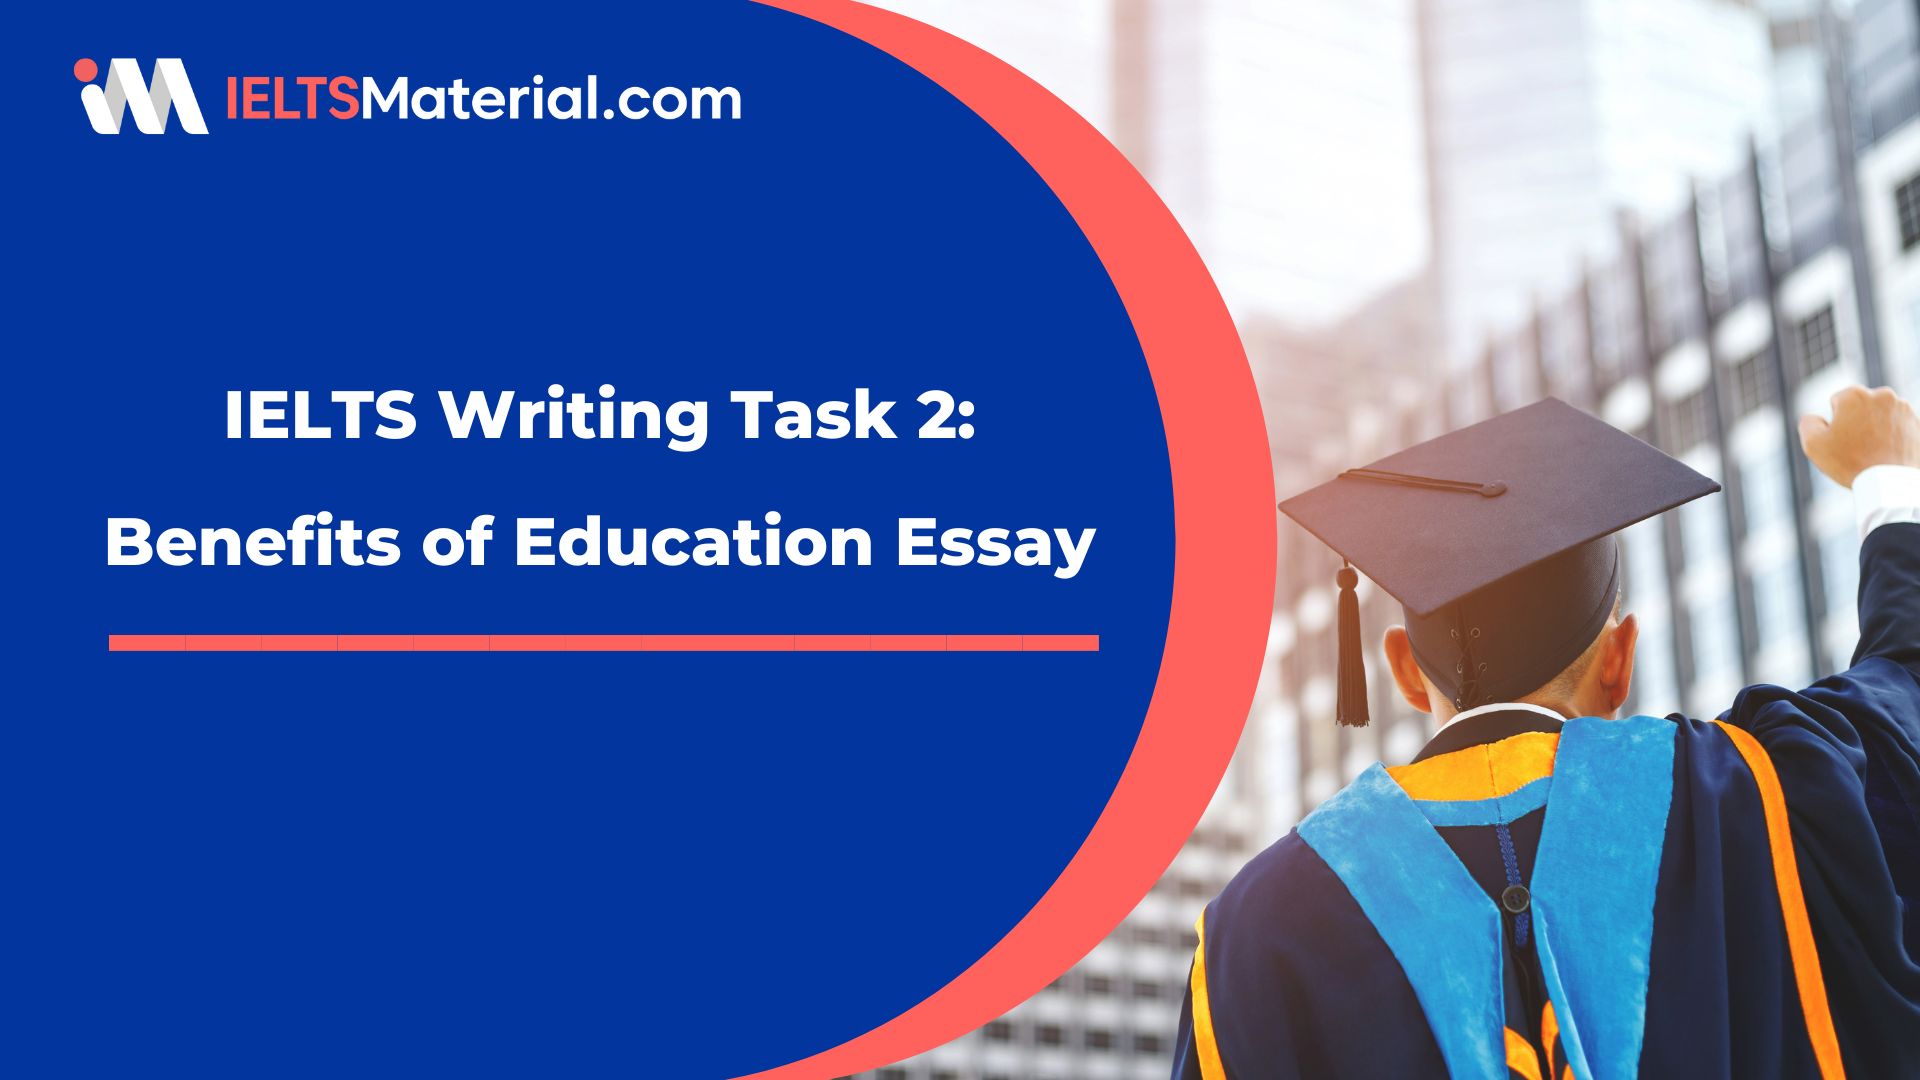 IELTS Writing Task 2: Benefits of Education Essay